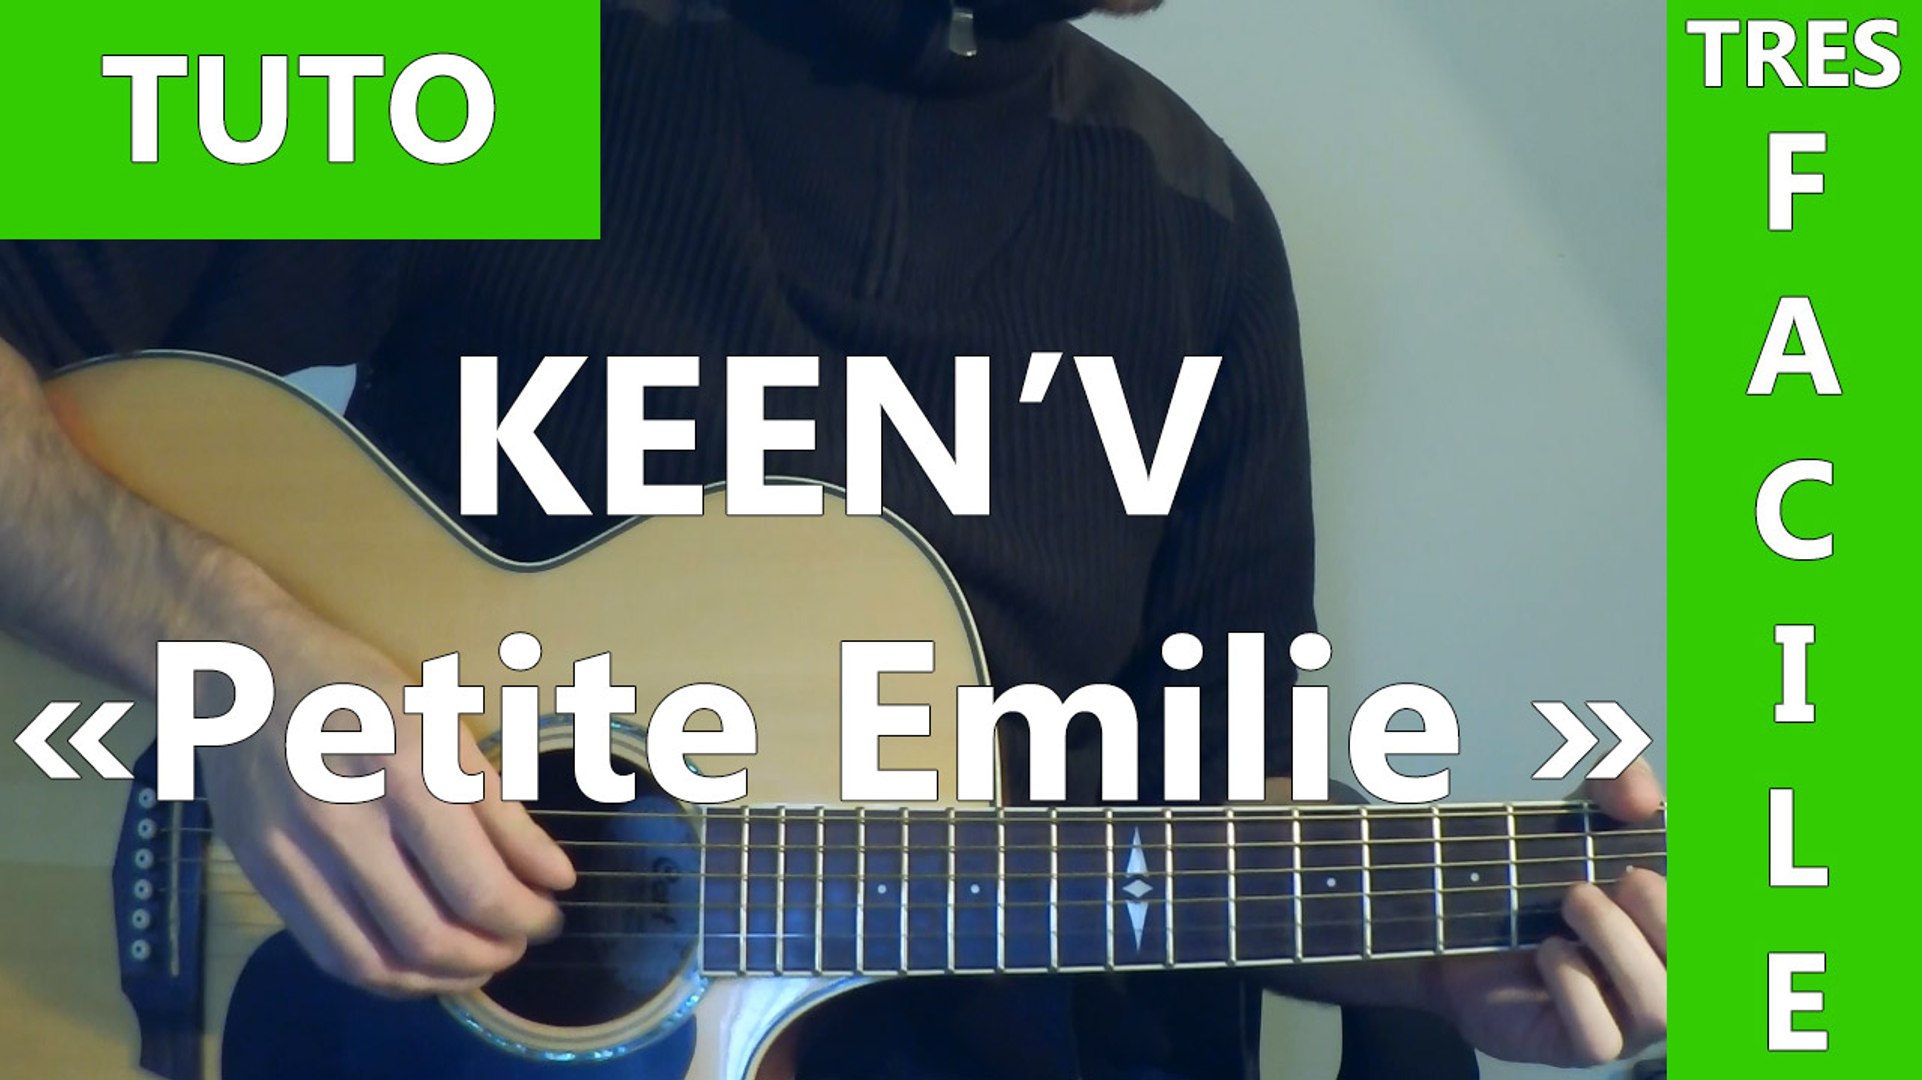 Keen'v - Petite Emilie - TUTO Guitare - Vidéo Dailymotion